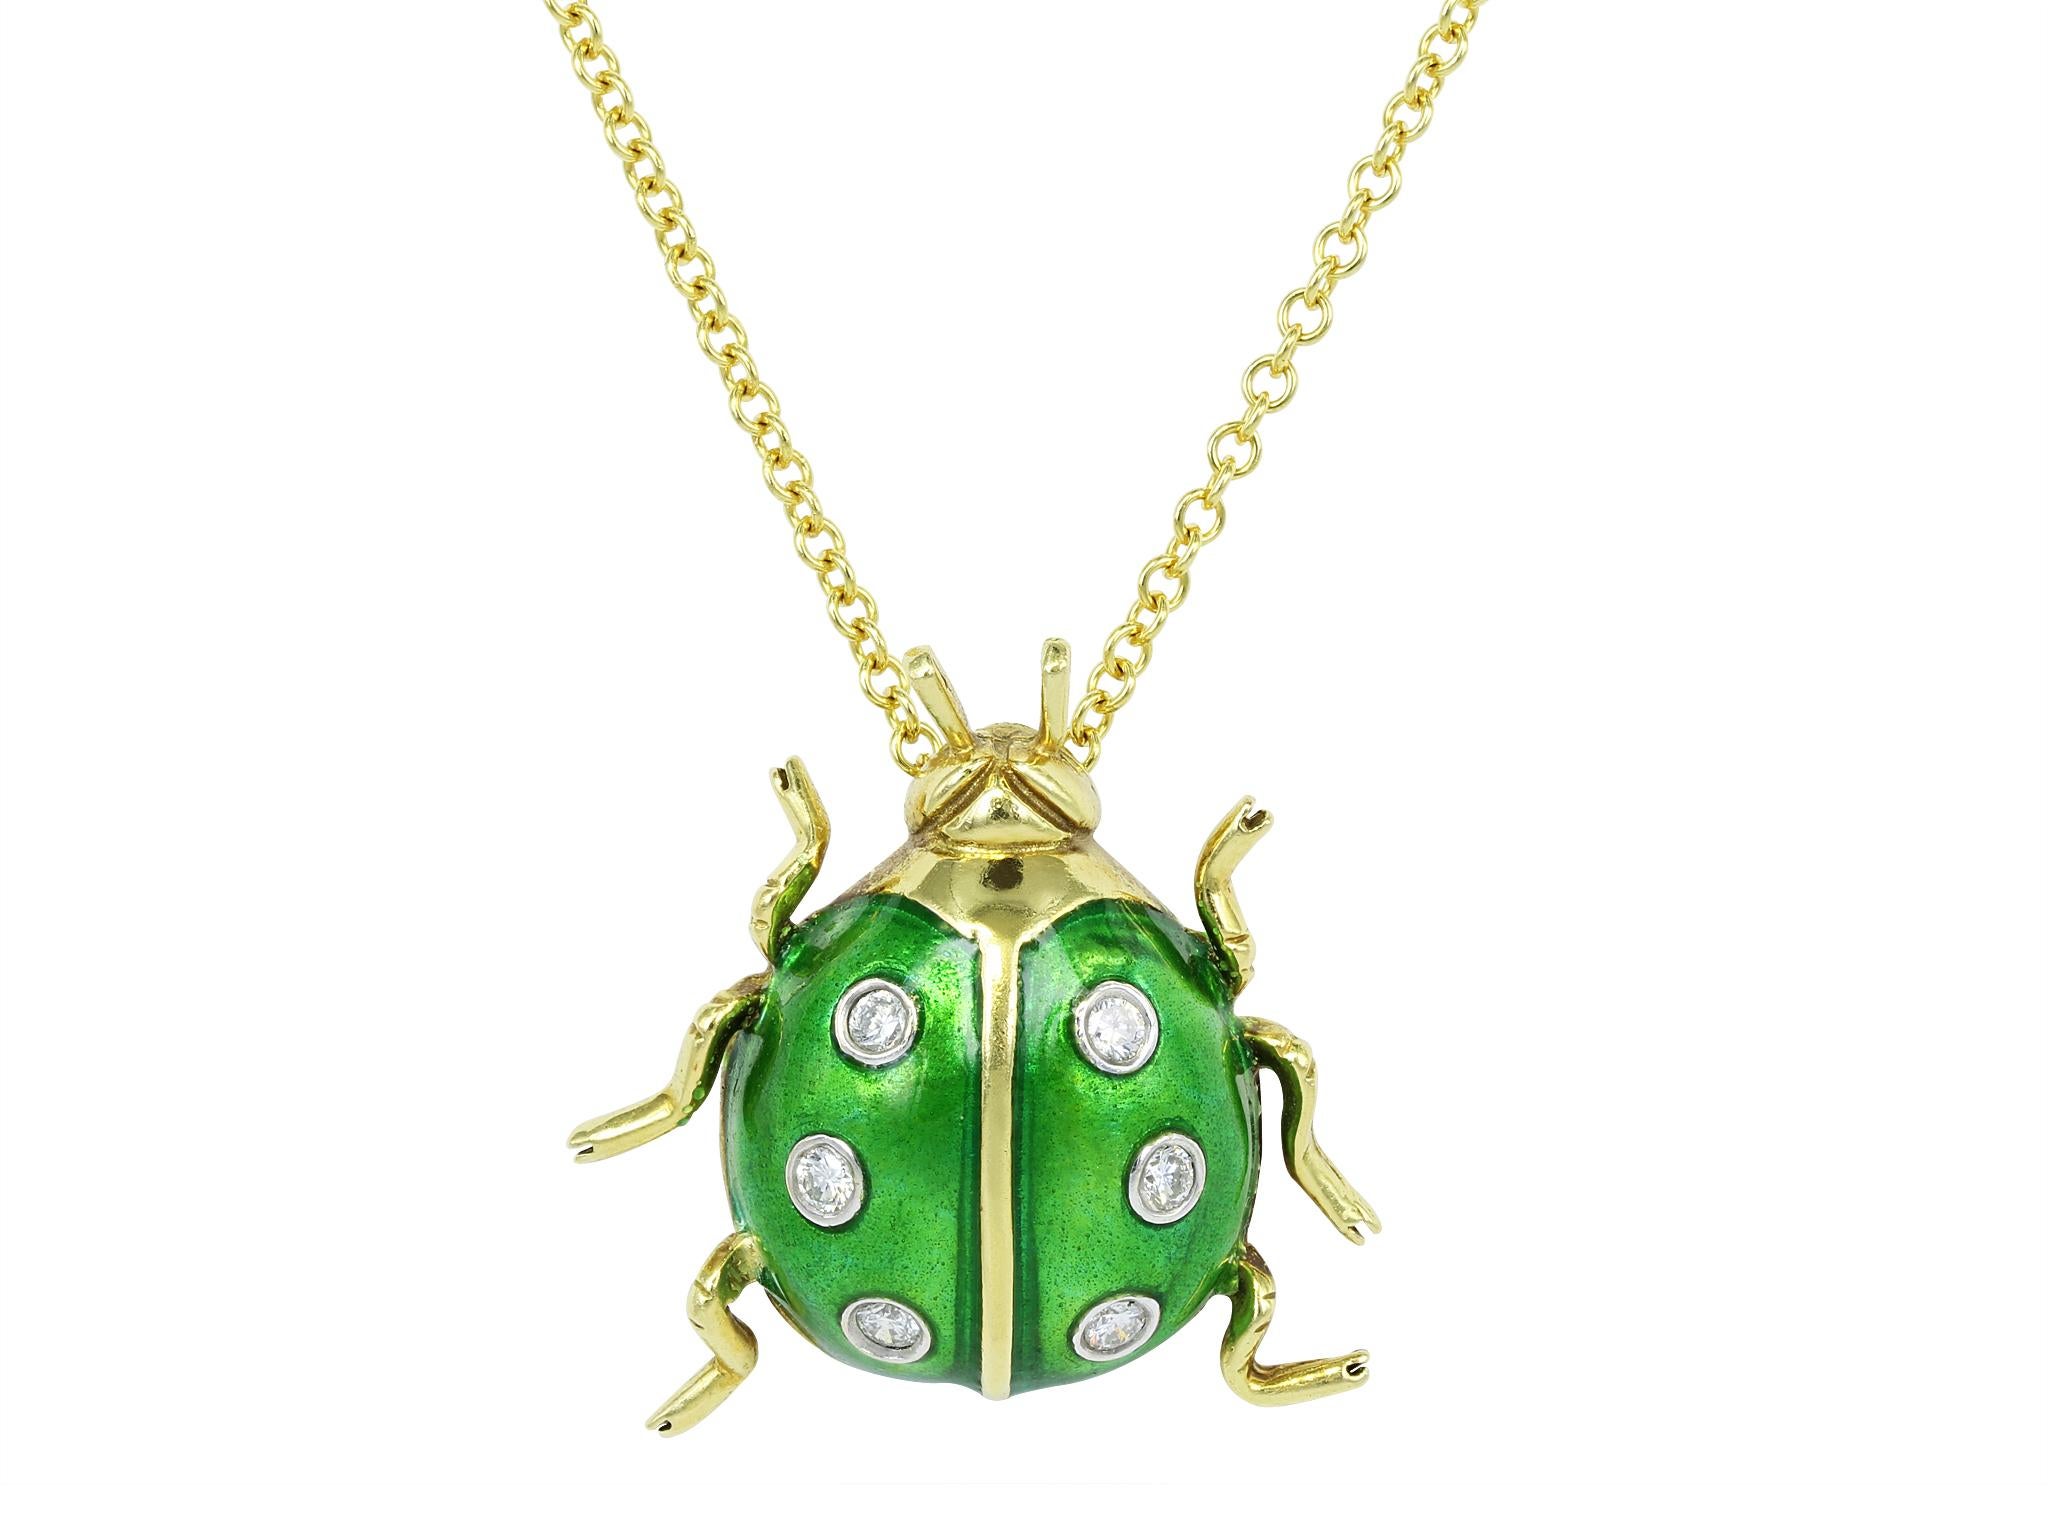 18 karat yellow gold green enamel with full diamond accents estate ladybug pendant.